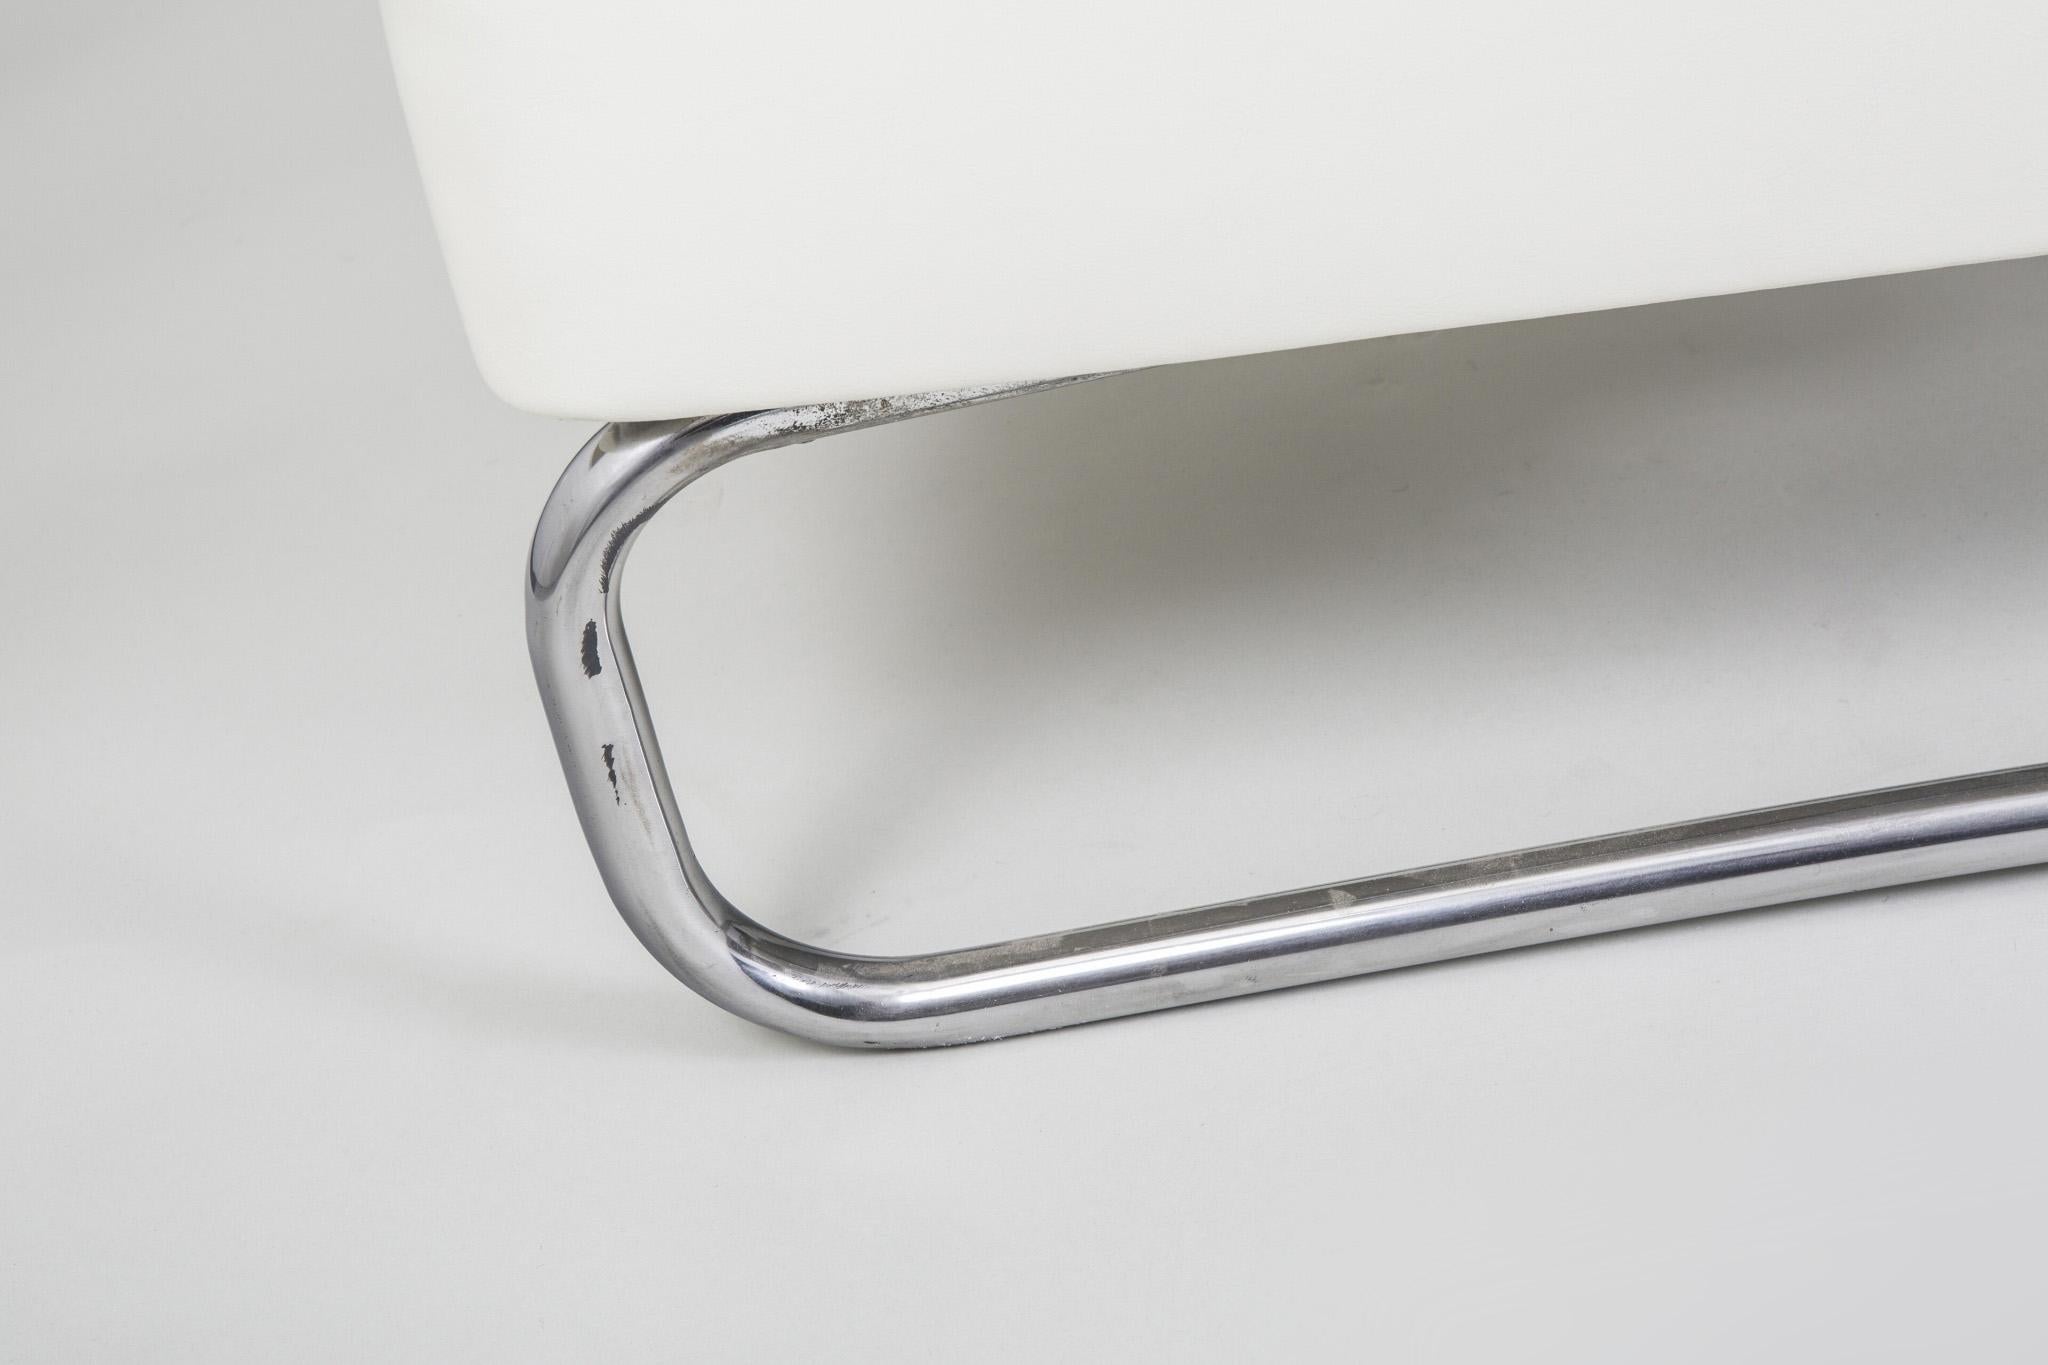 20th Century Tubular Chrom Cantilever Armchair by Mücke-Melder, White Leather, New Upholstery